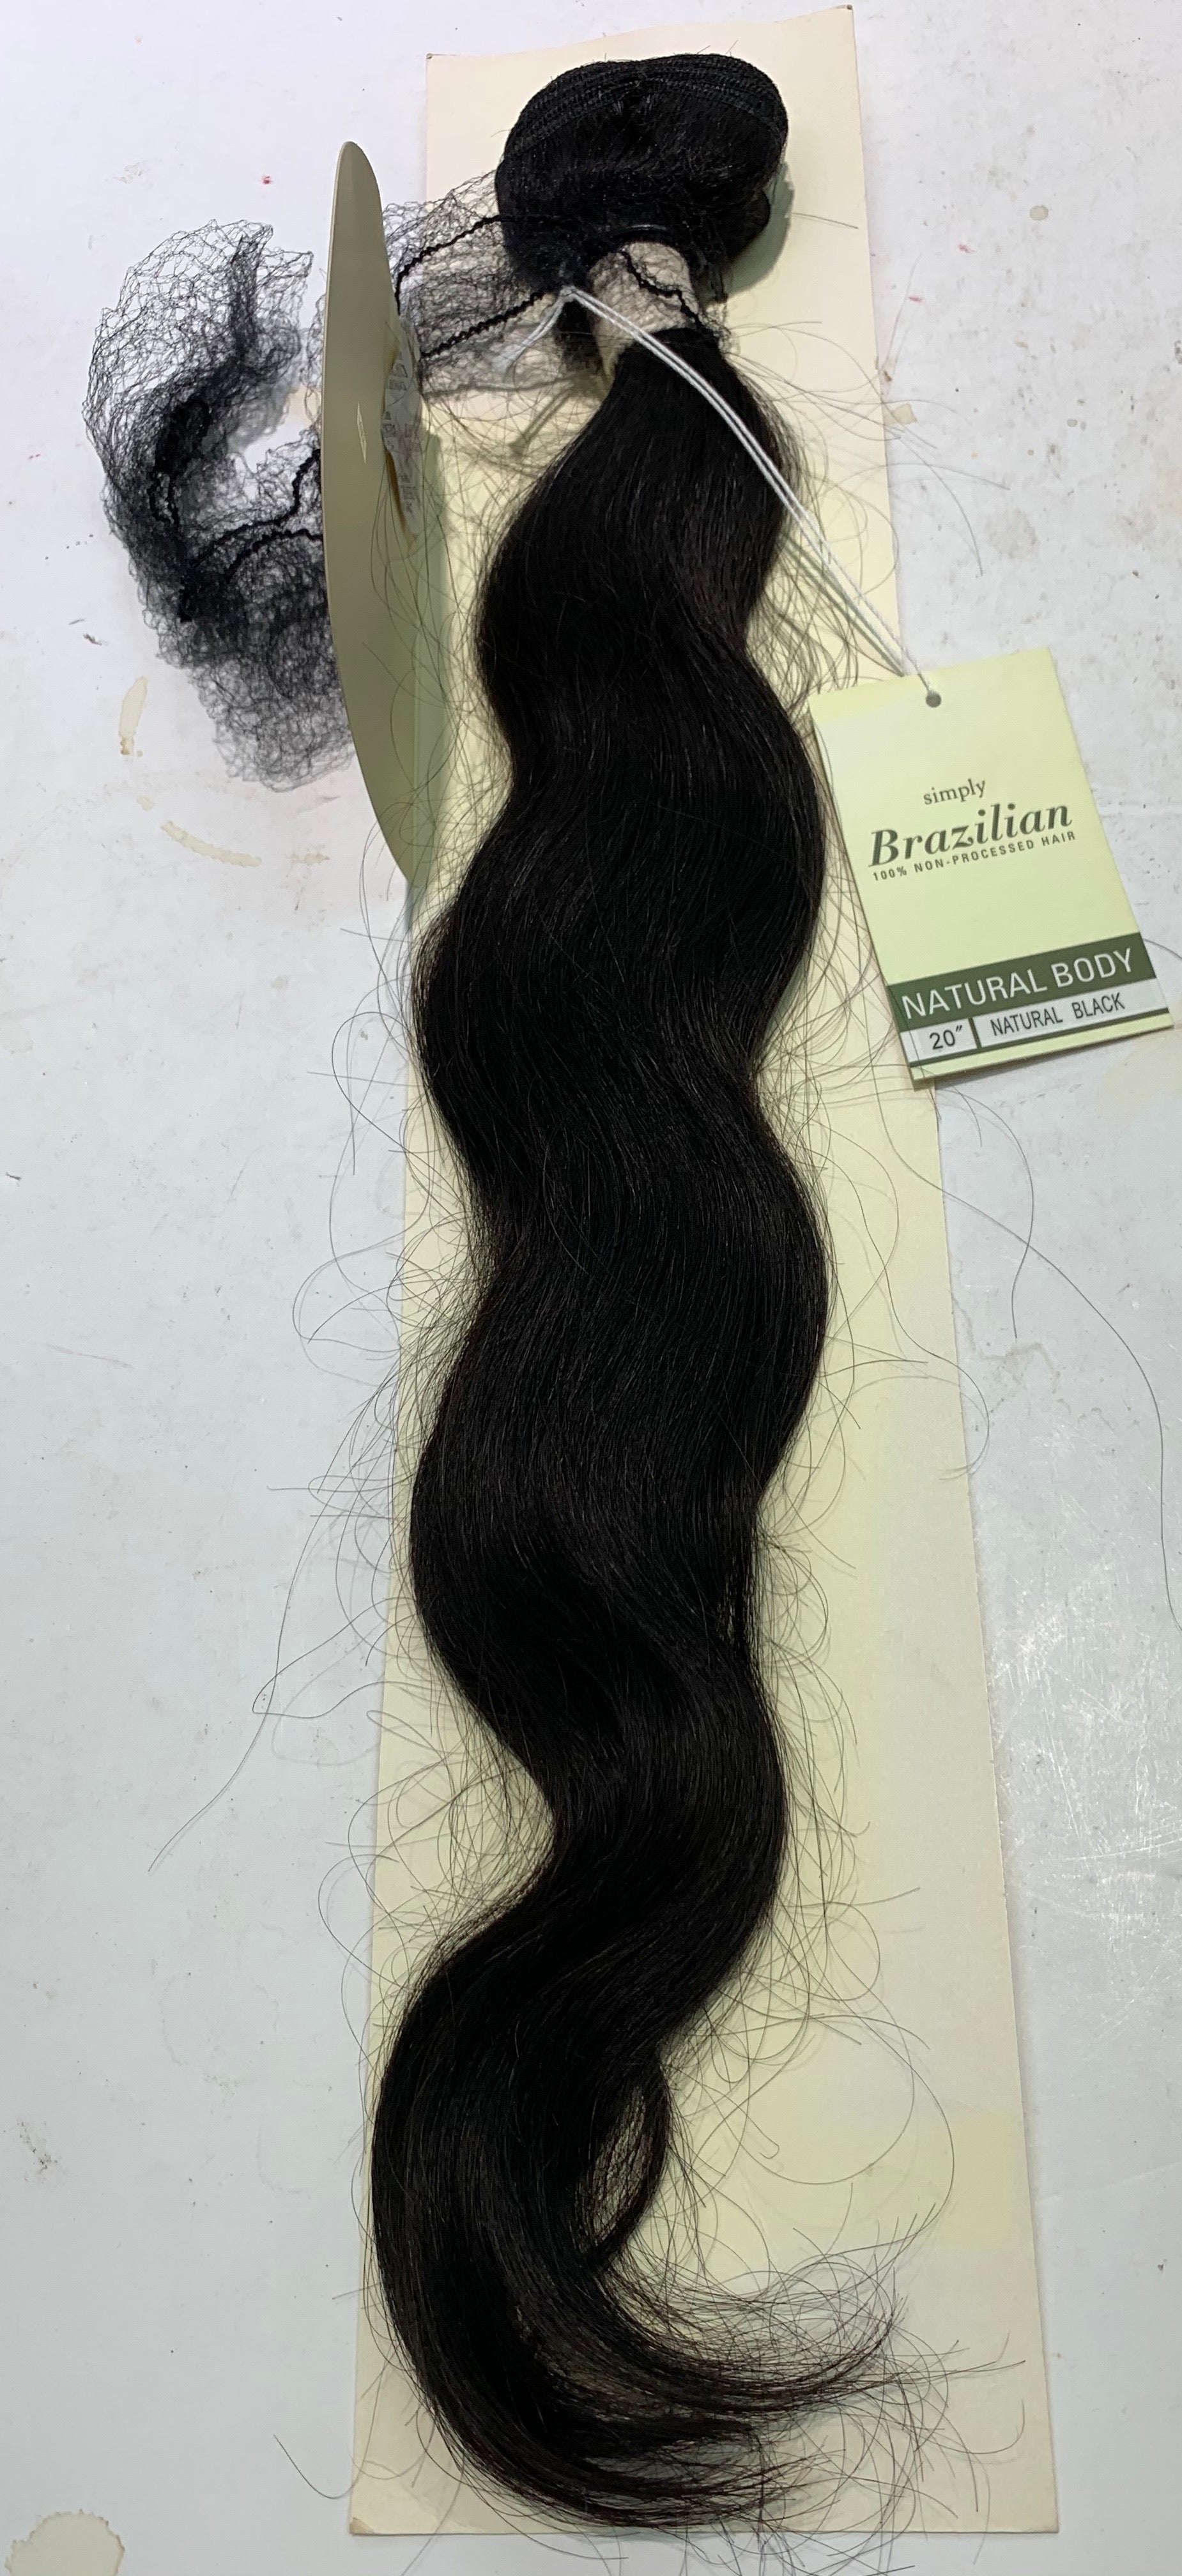 Simply brazilian 100% unprocessed hair 20/22”